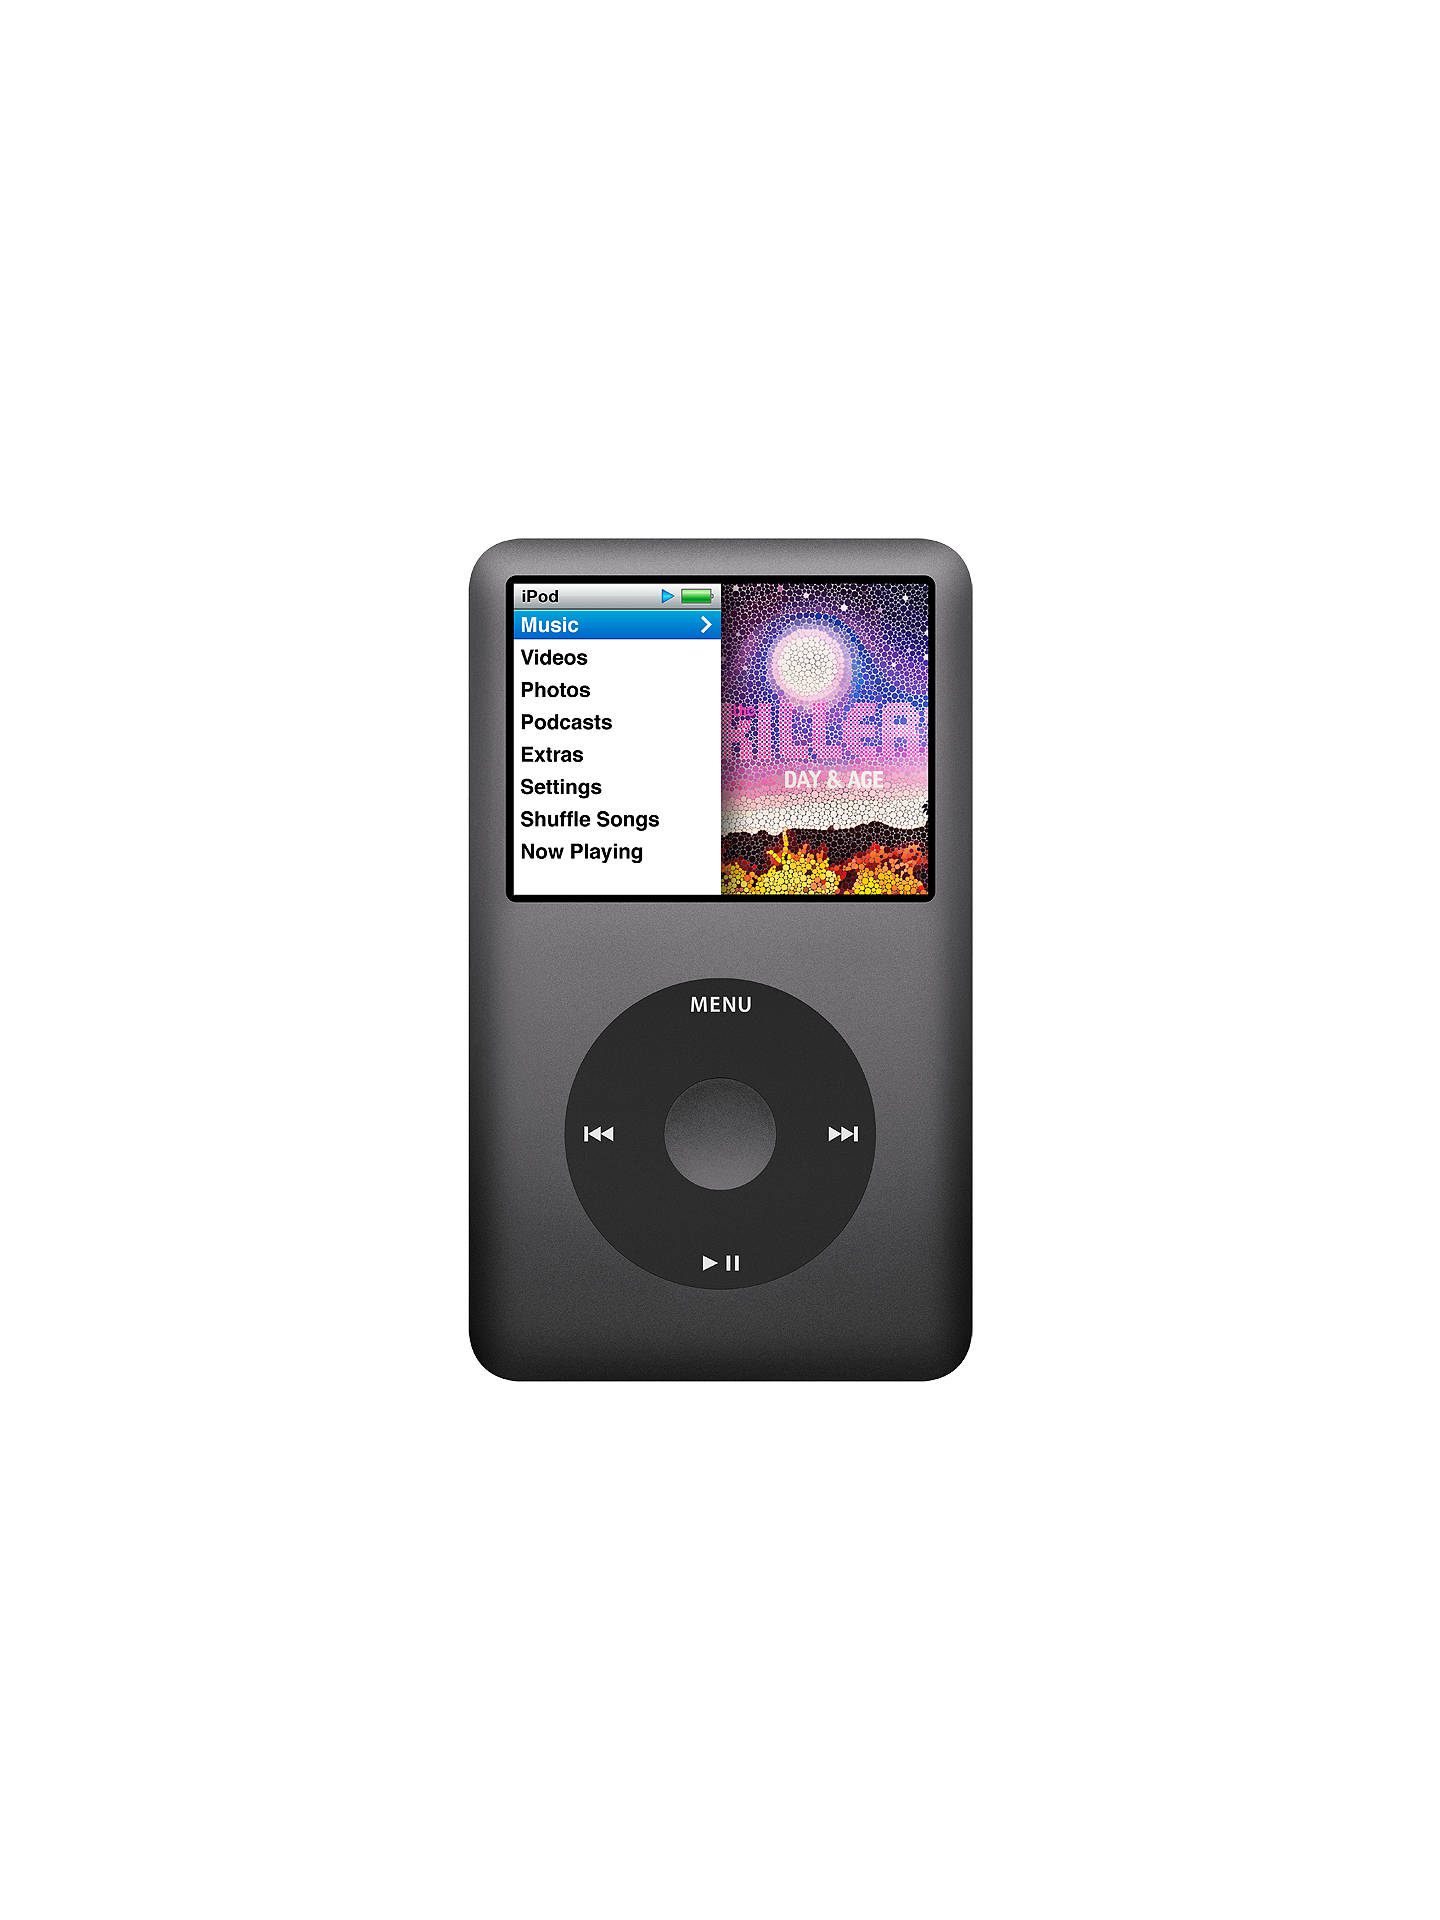 Apple iPod classic, 160GB, Black at John Lewis & Partners